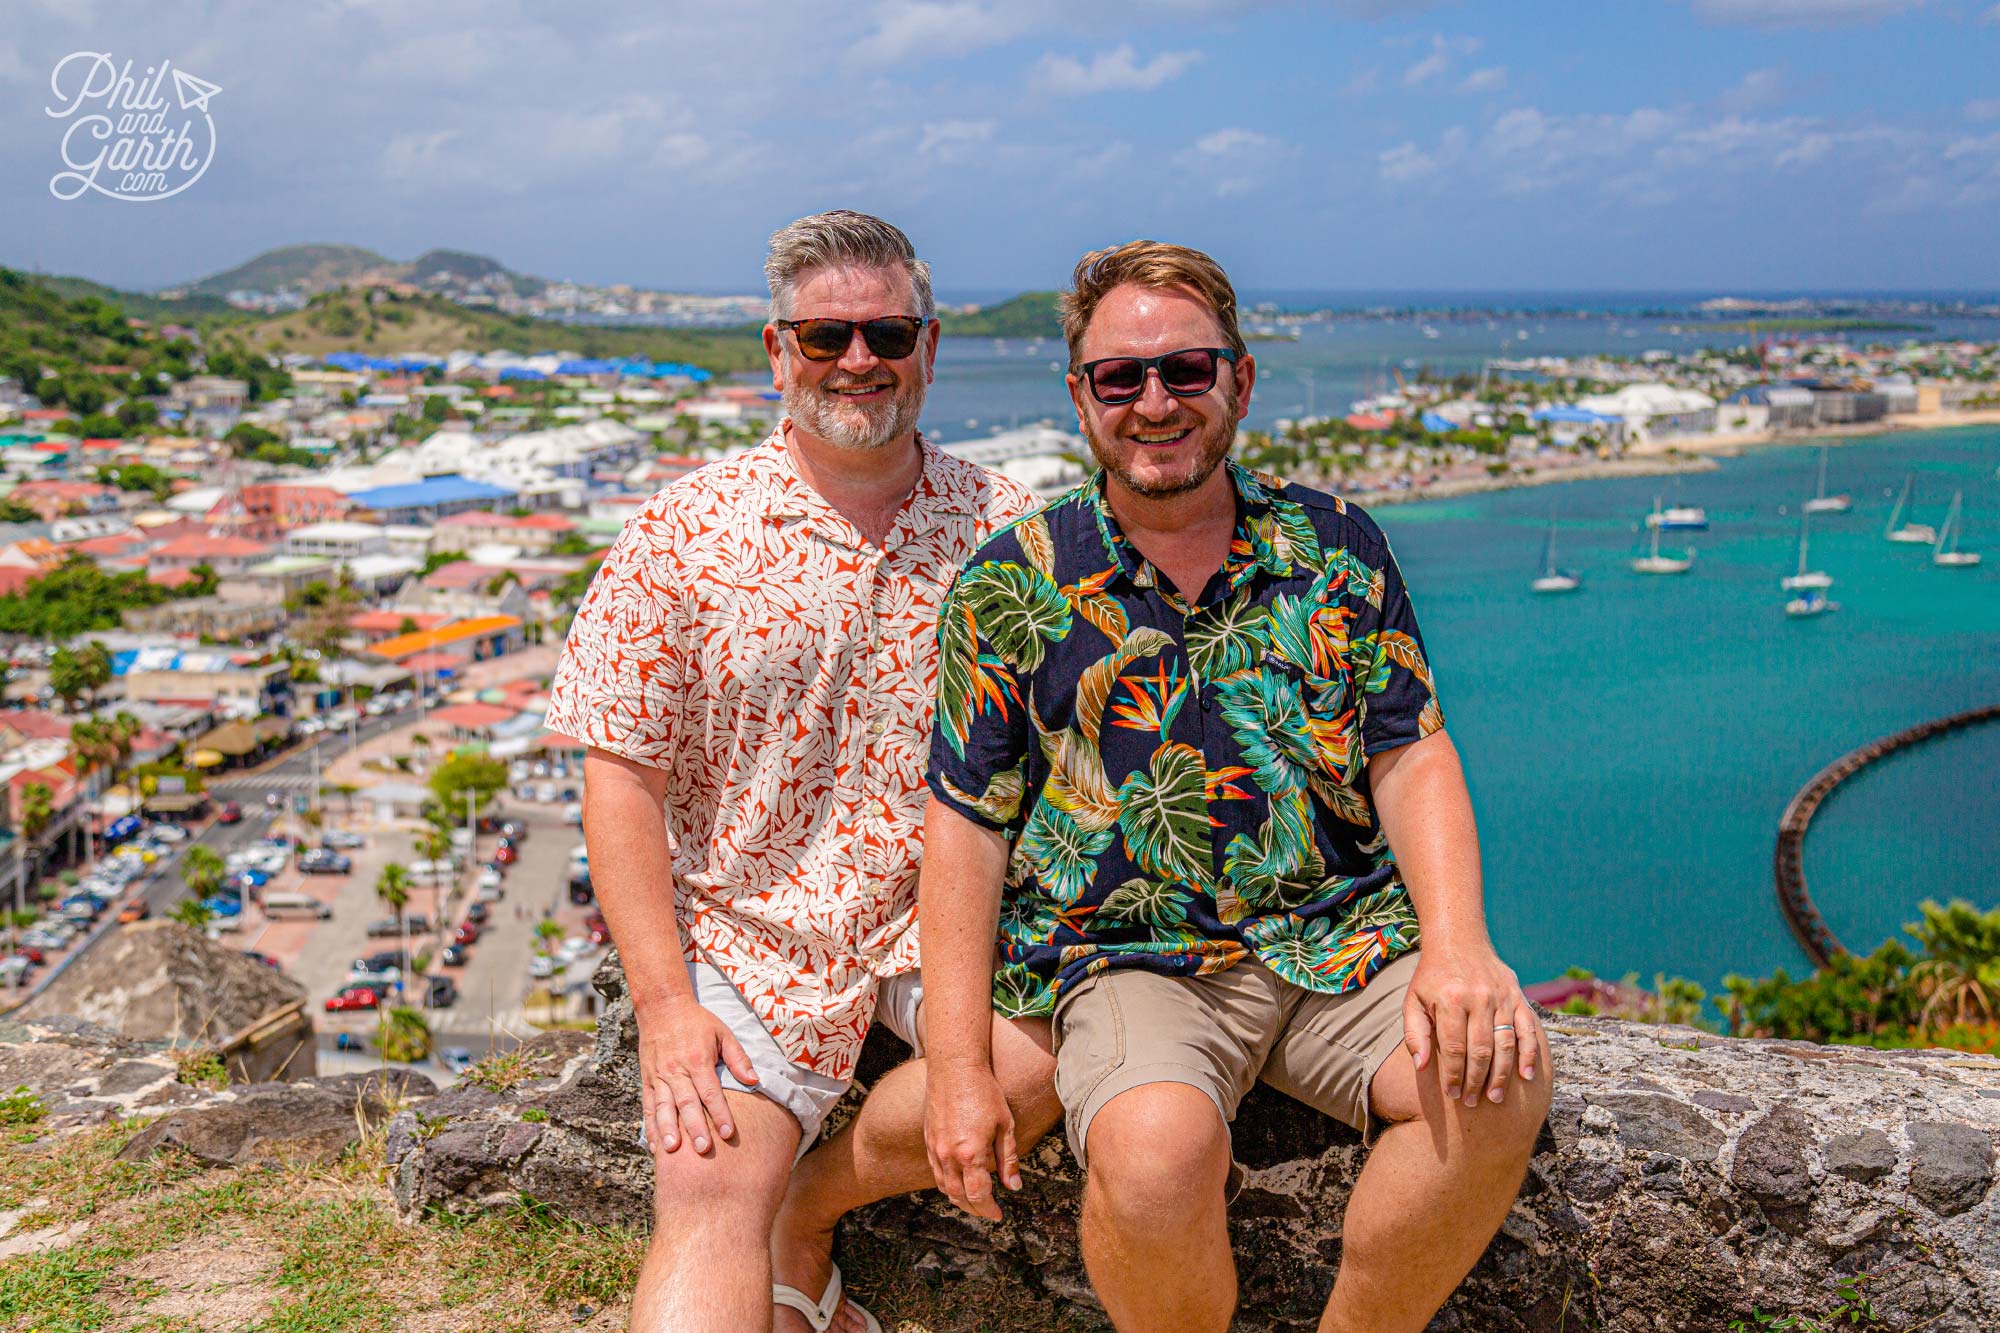 Phil and Garth's Top 5 St Maarten/St Martin Travel Tips